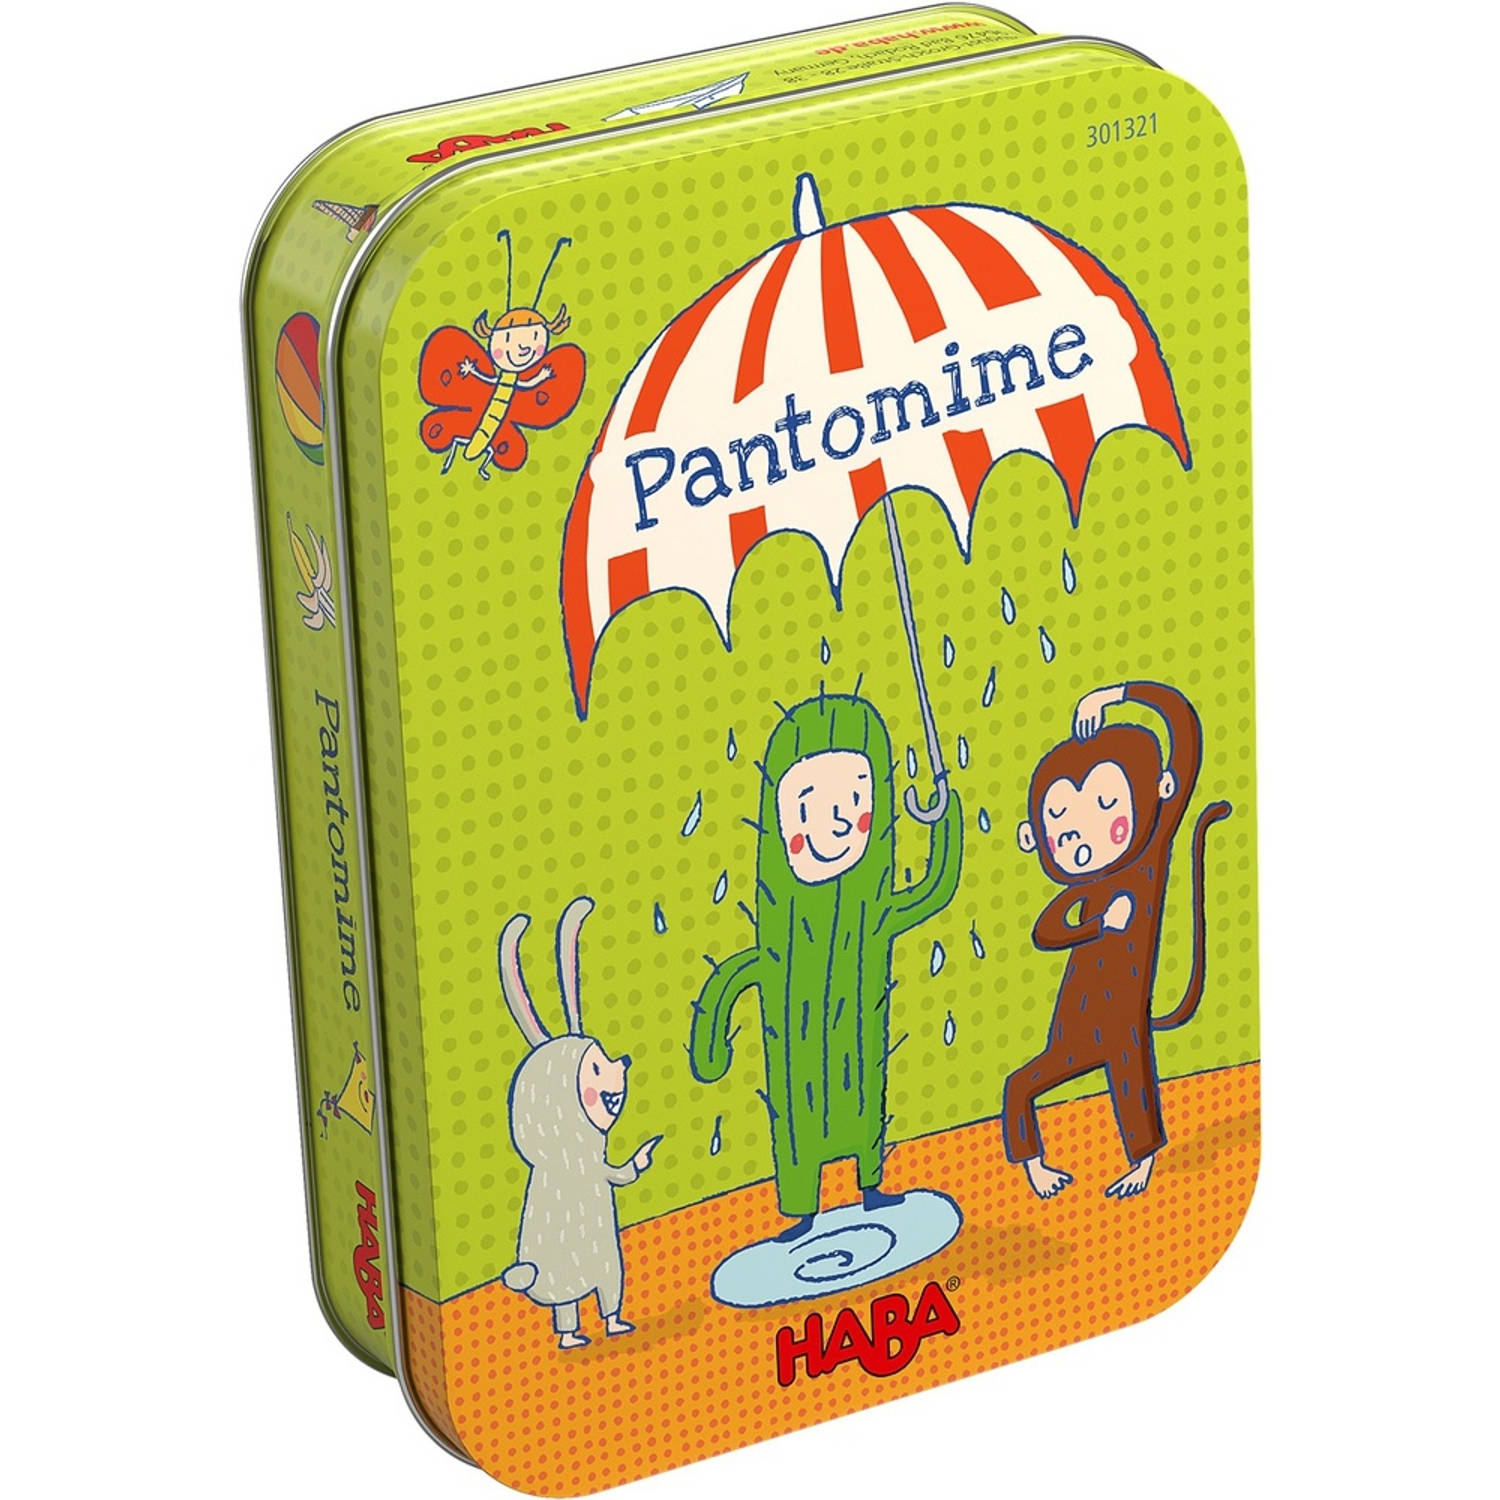 Speelgoed | Wooden Toys - Spel - Pantomine (Duitse Verpakking Met Nederlandse Ha